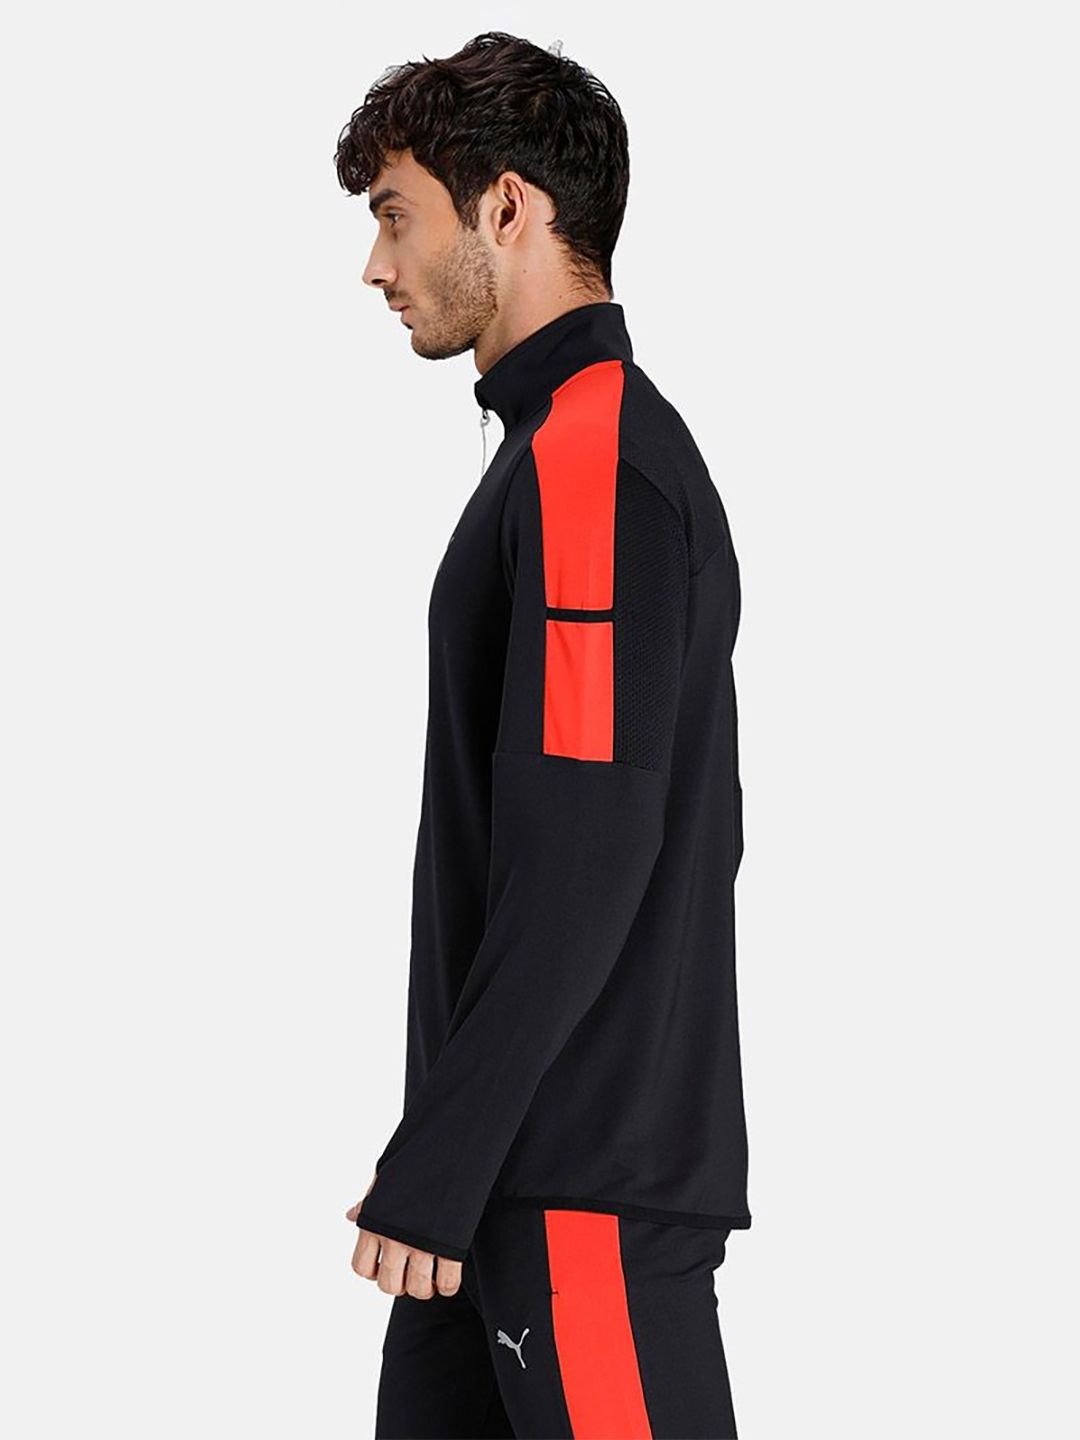 Buy Men Black & Red Solid Virat Kohli Full-Zip Sweatshirts From Fancode ...